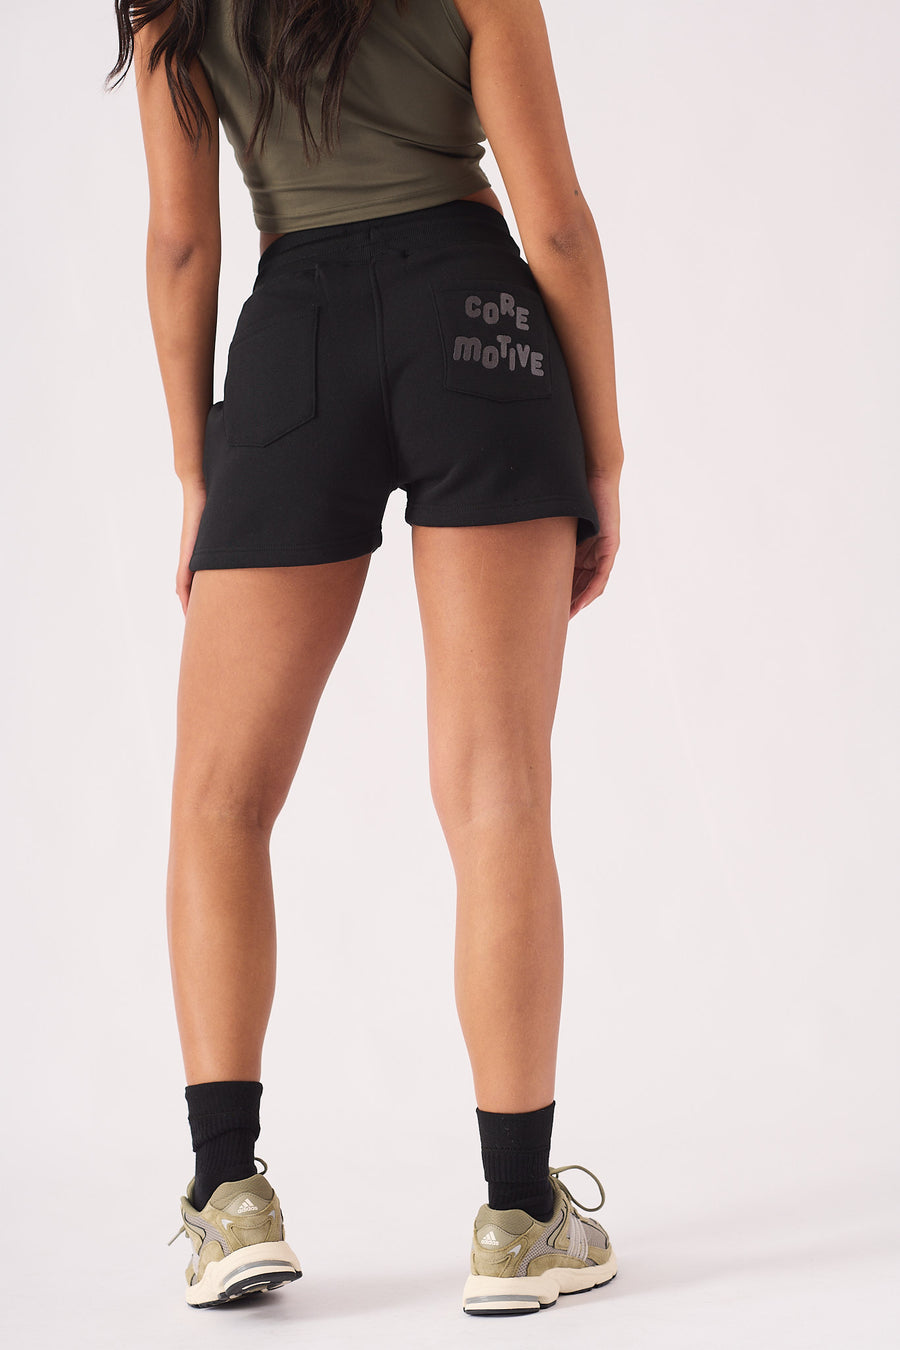 Buy Women's Athleisure Black Shorts - Jmojo